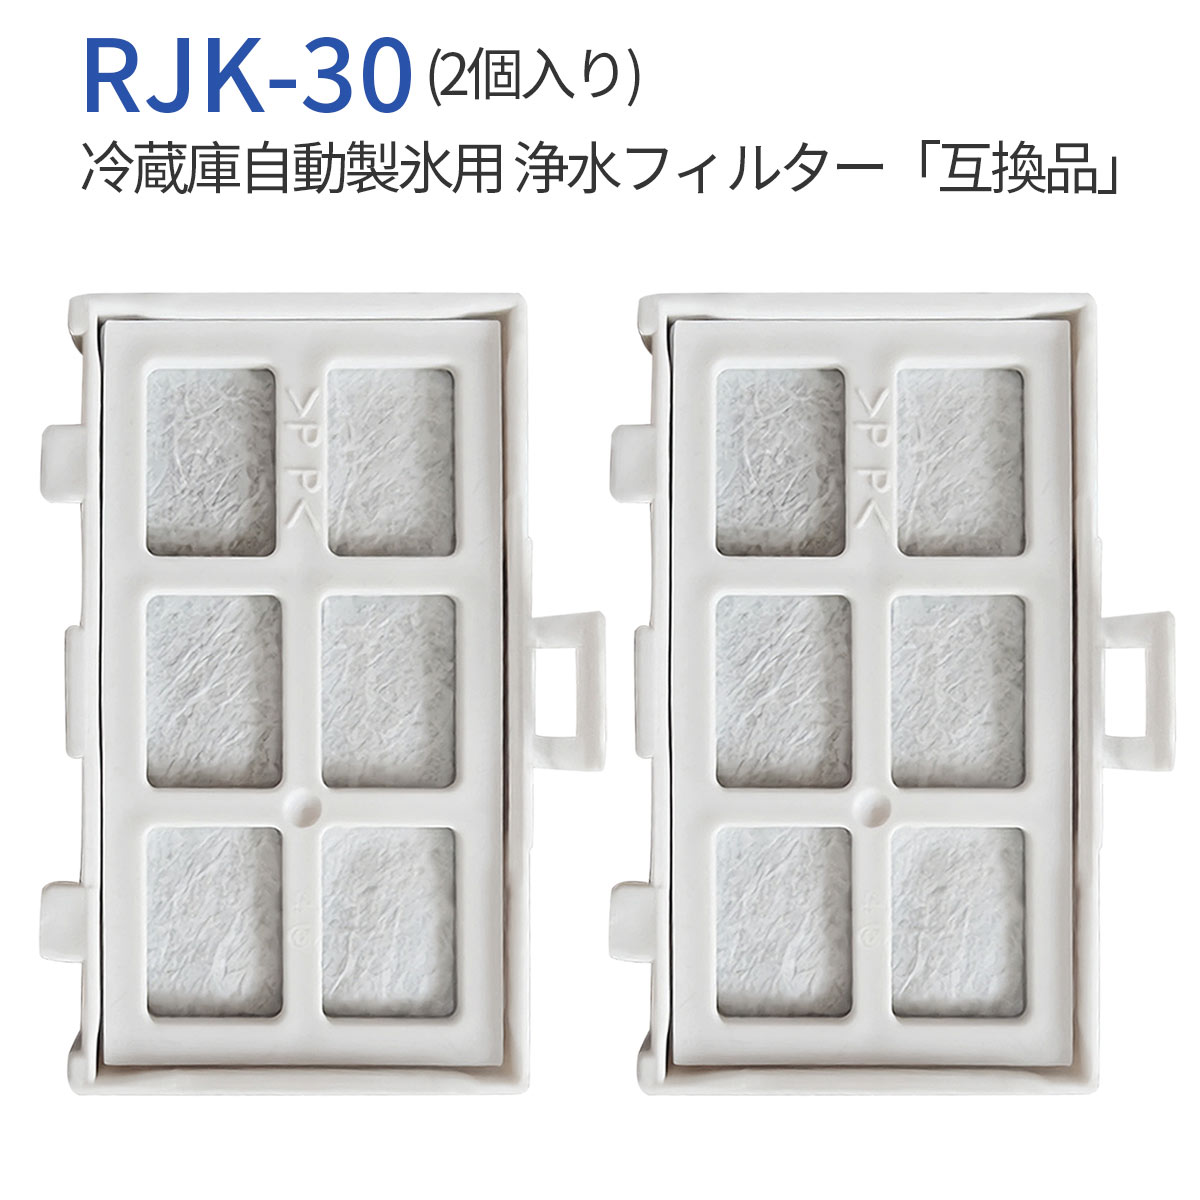 RJK30-100 冷蔵庫 製氷機 フィルター rj